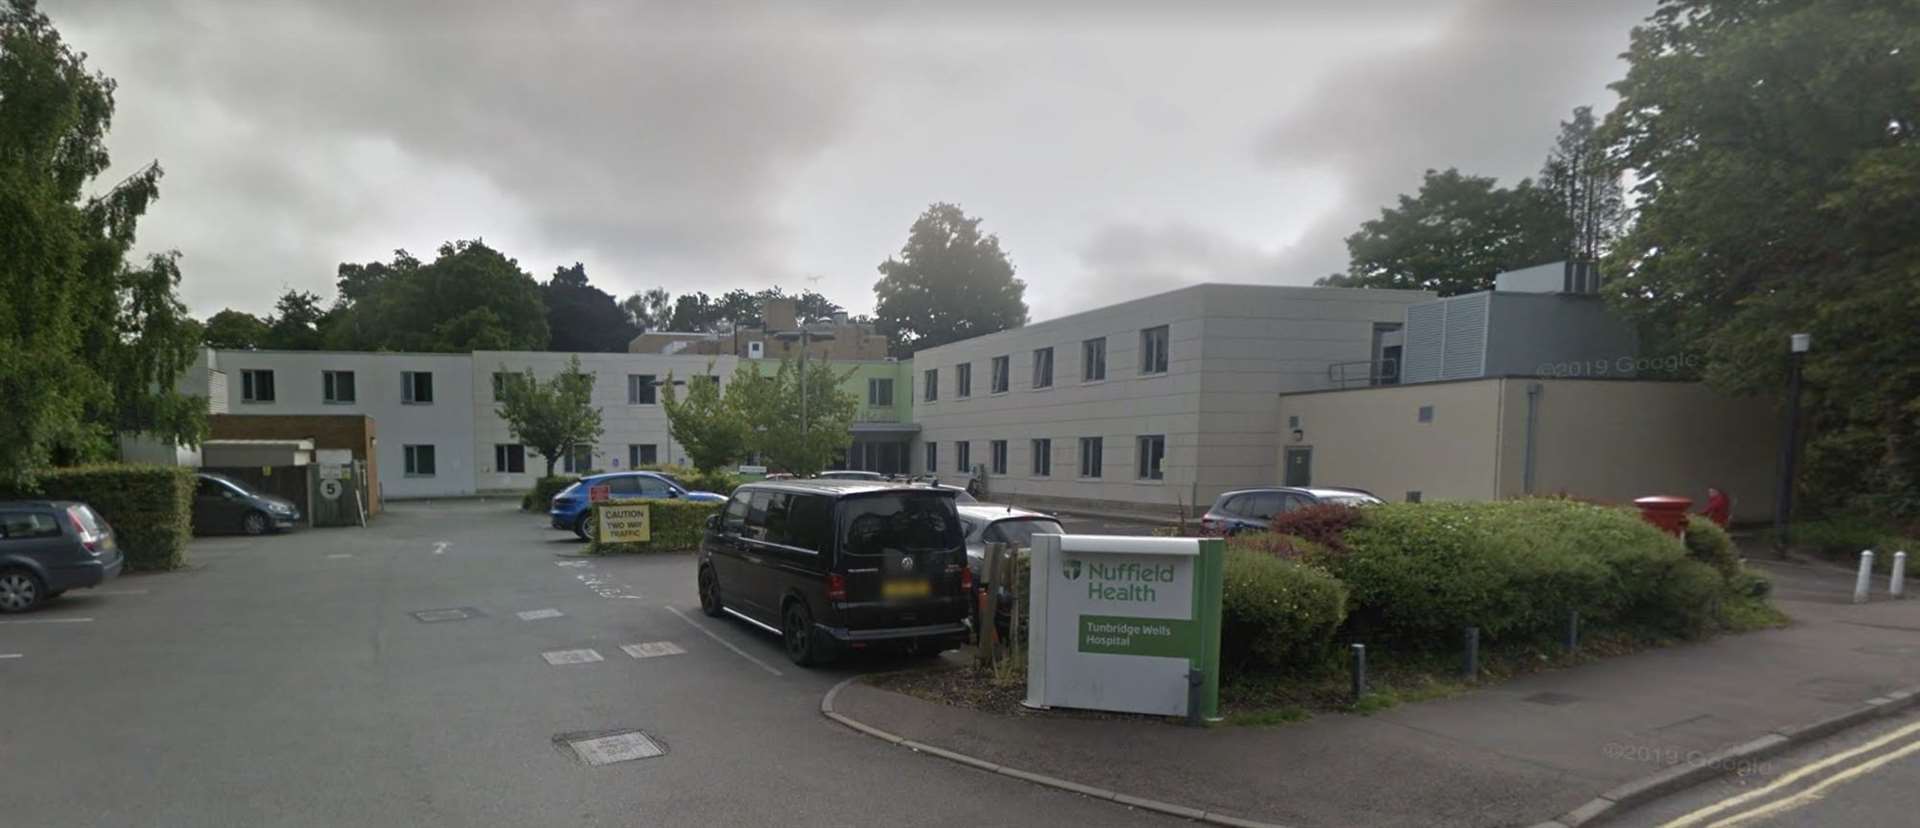 Nuffield Health Tunbridge Wells Hospital. Picture: Google Street View